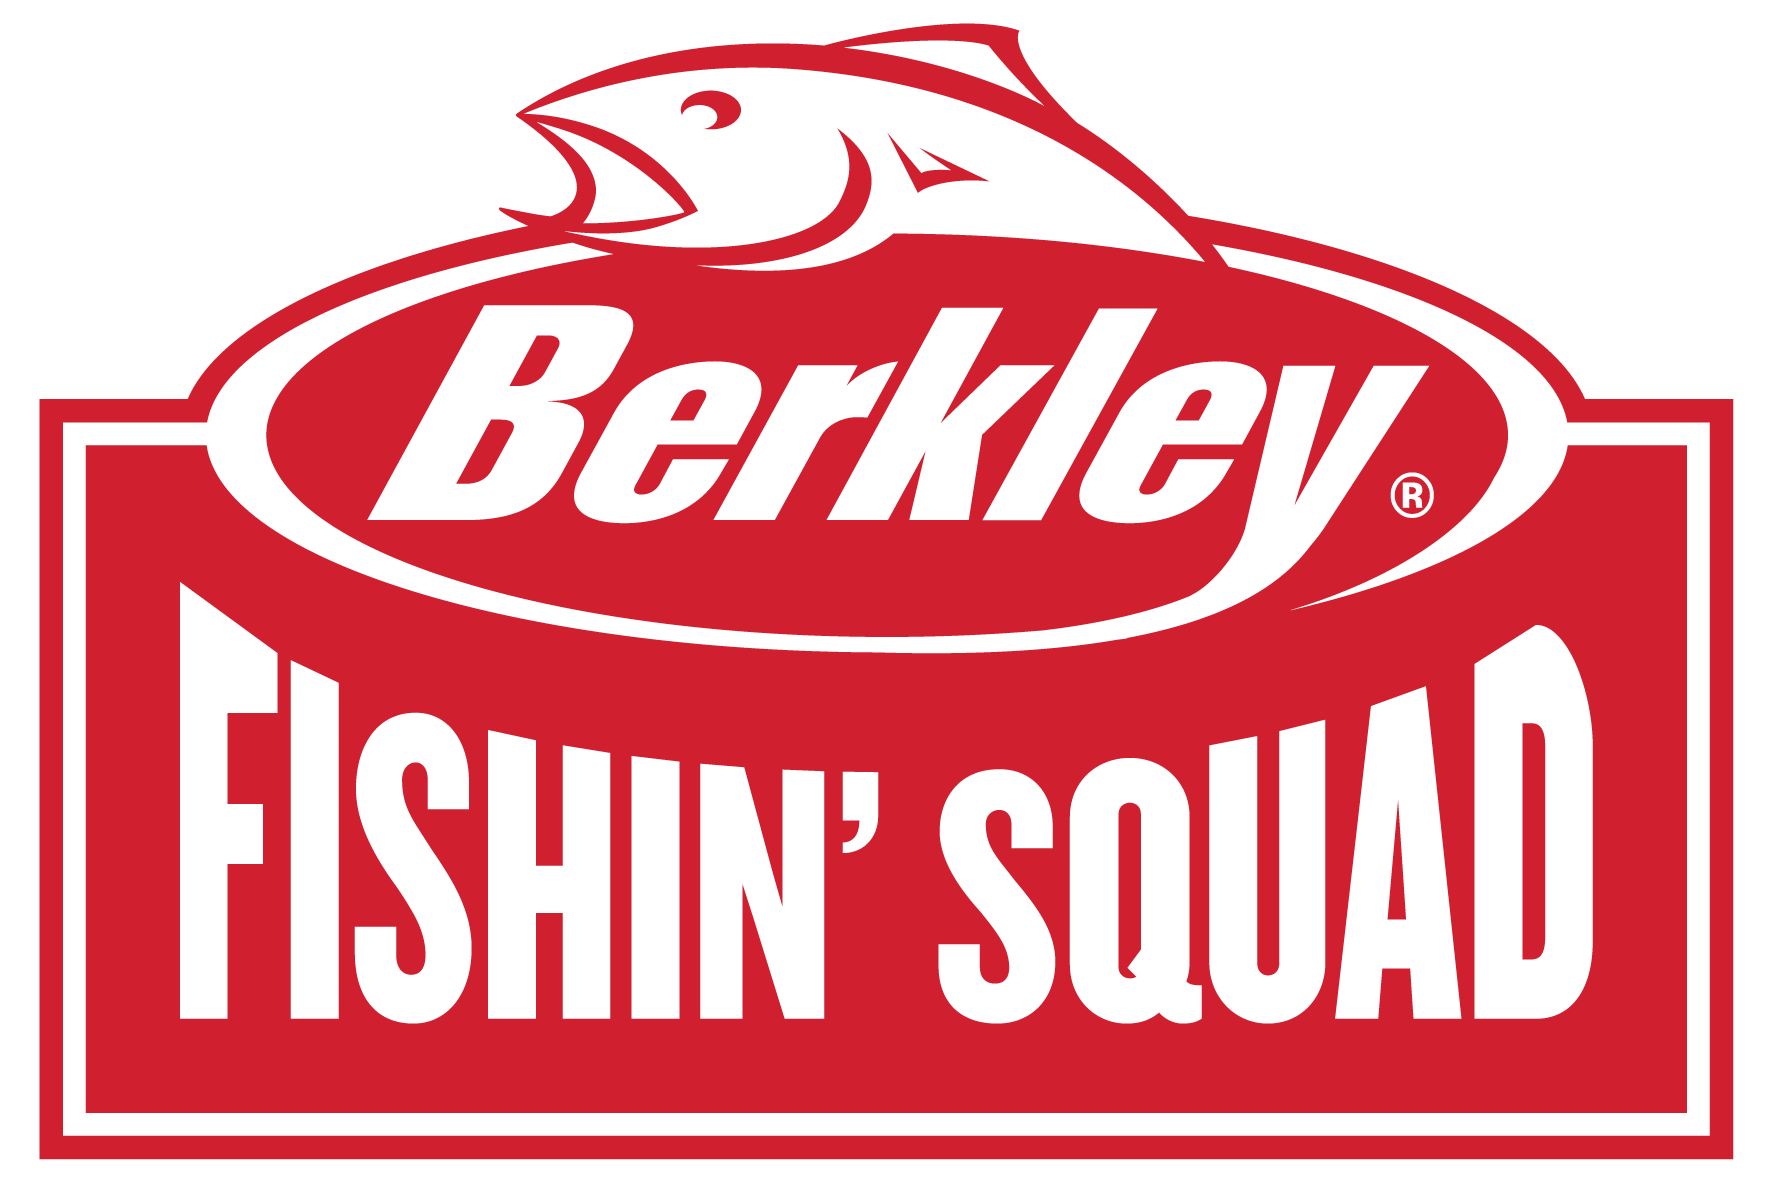 Welcome to the Berkley Fishin' Squad